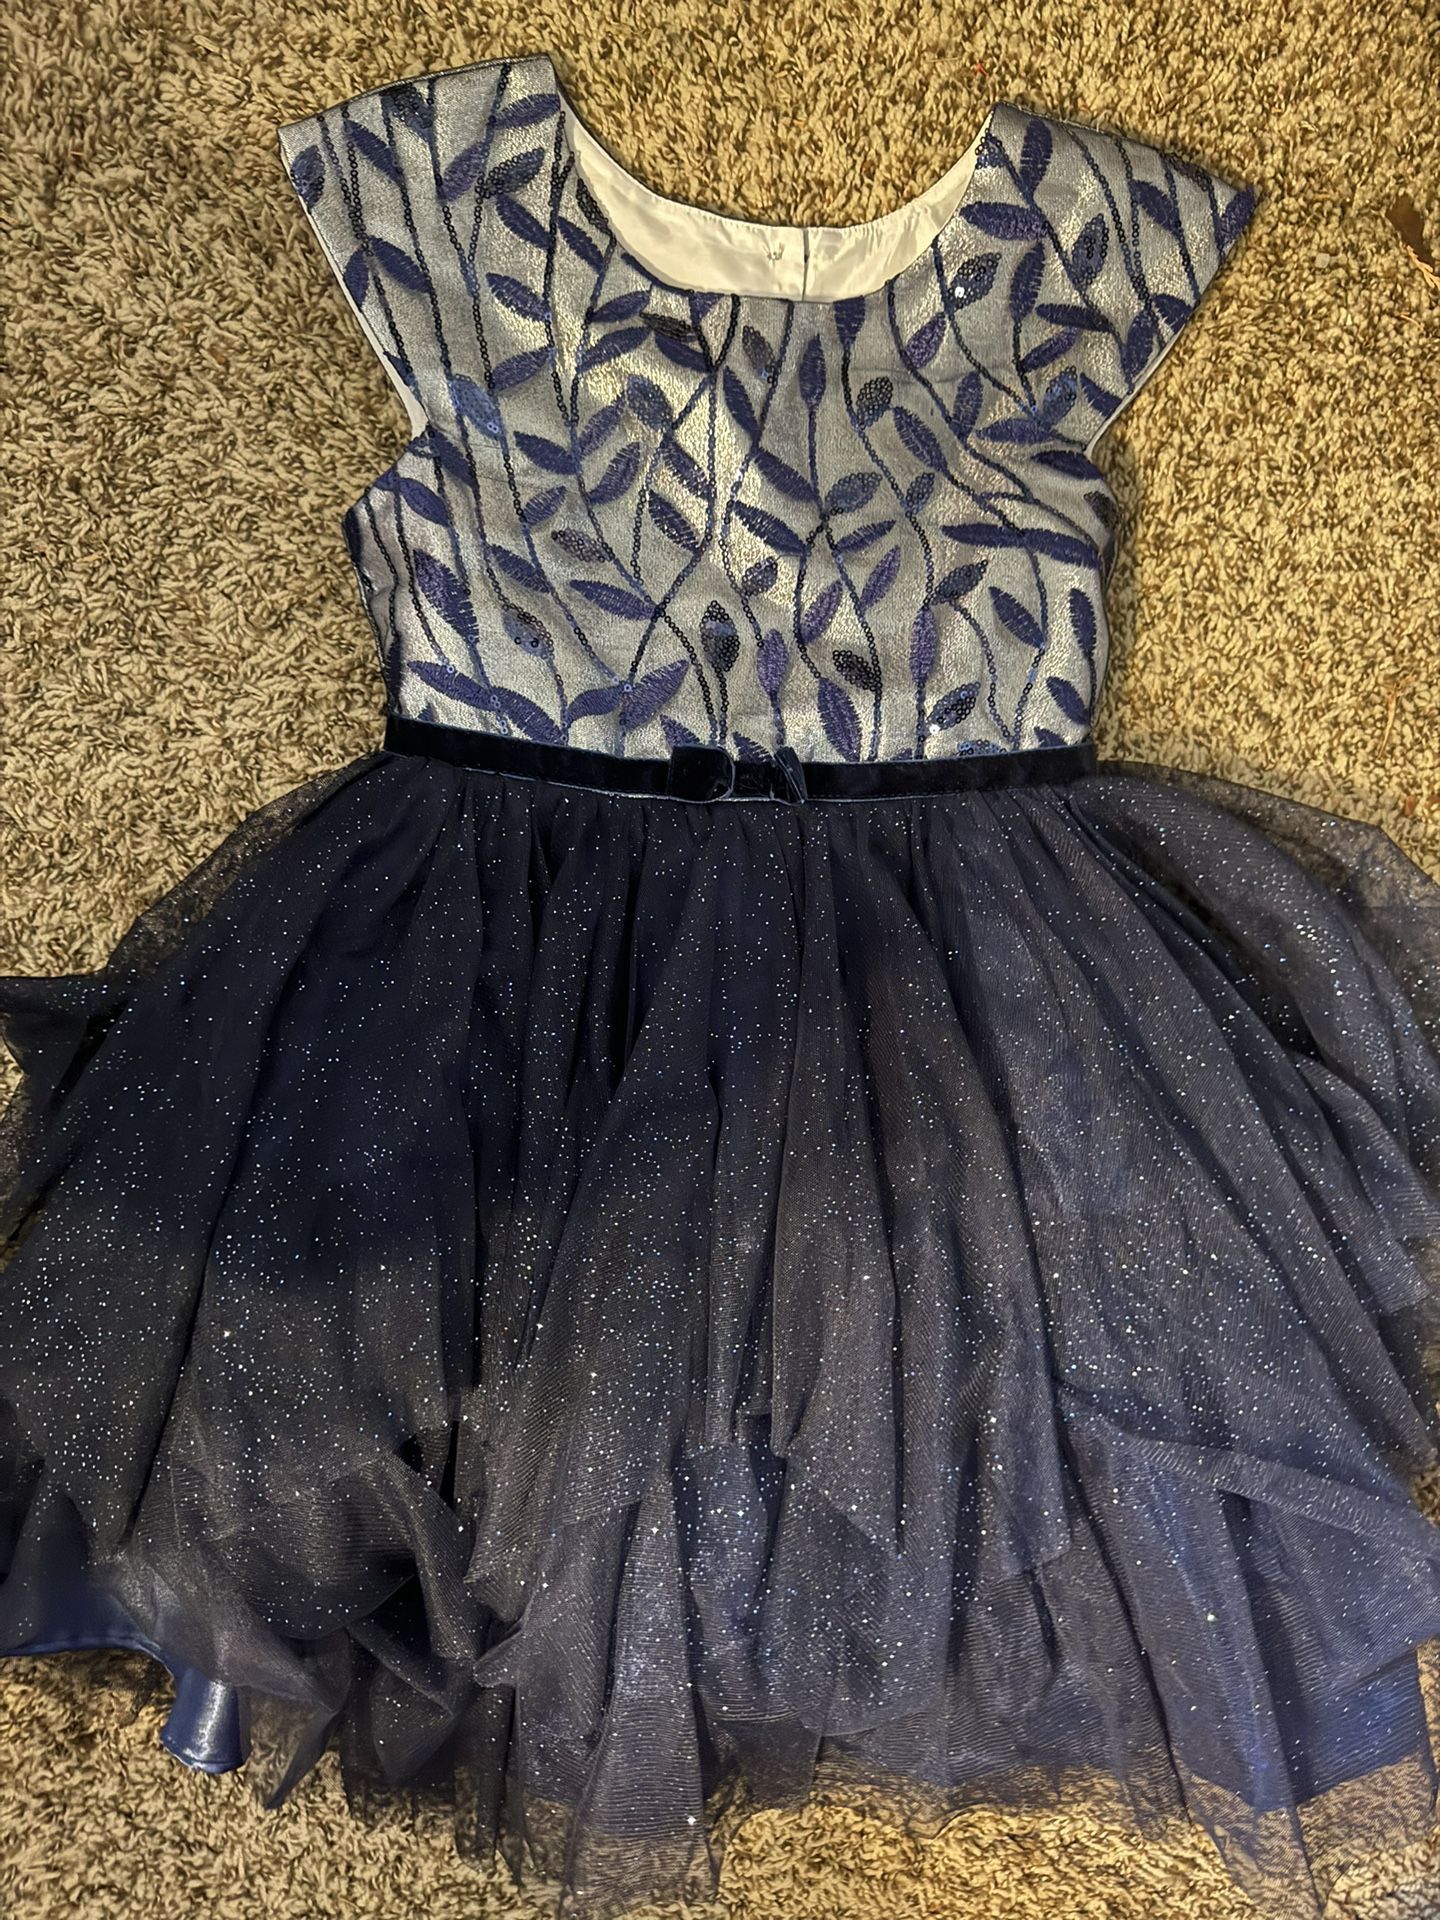 Girls Size 7 Sparkly Blue Dress